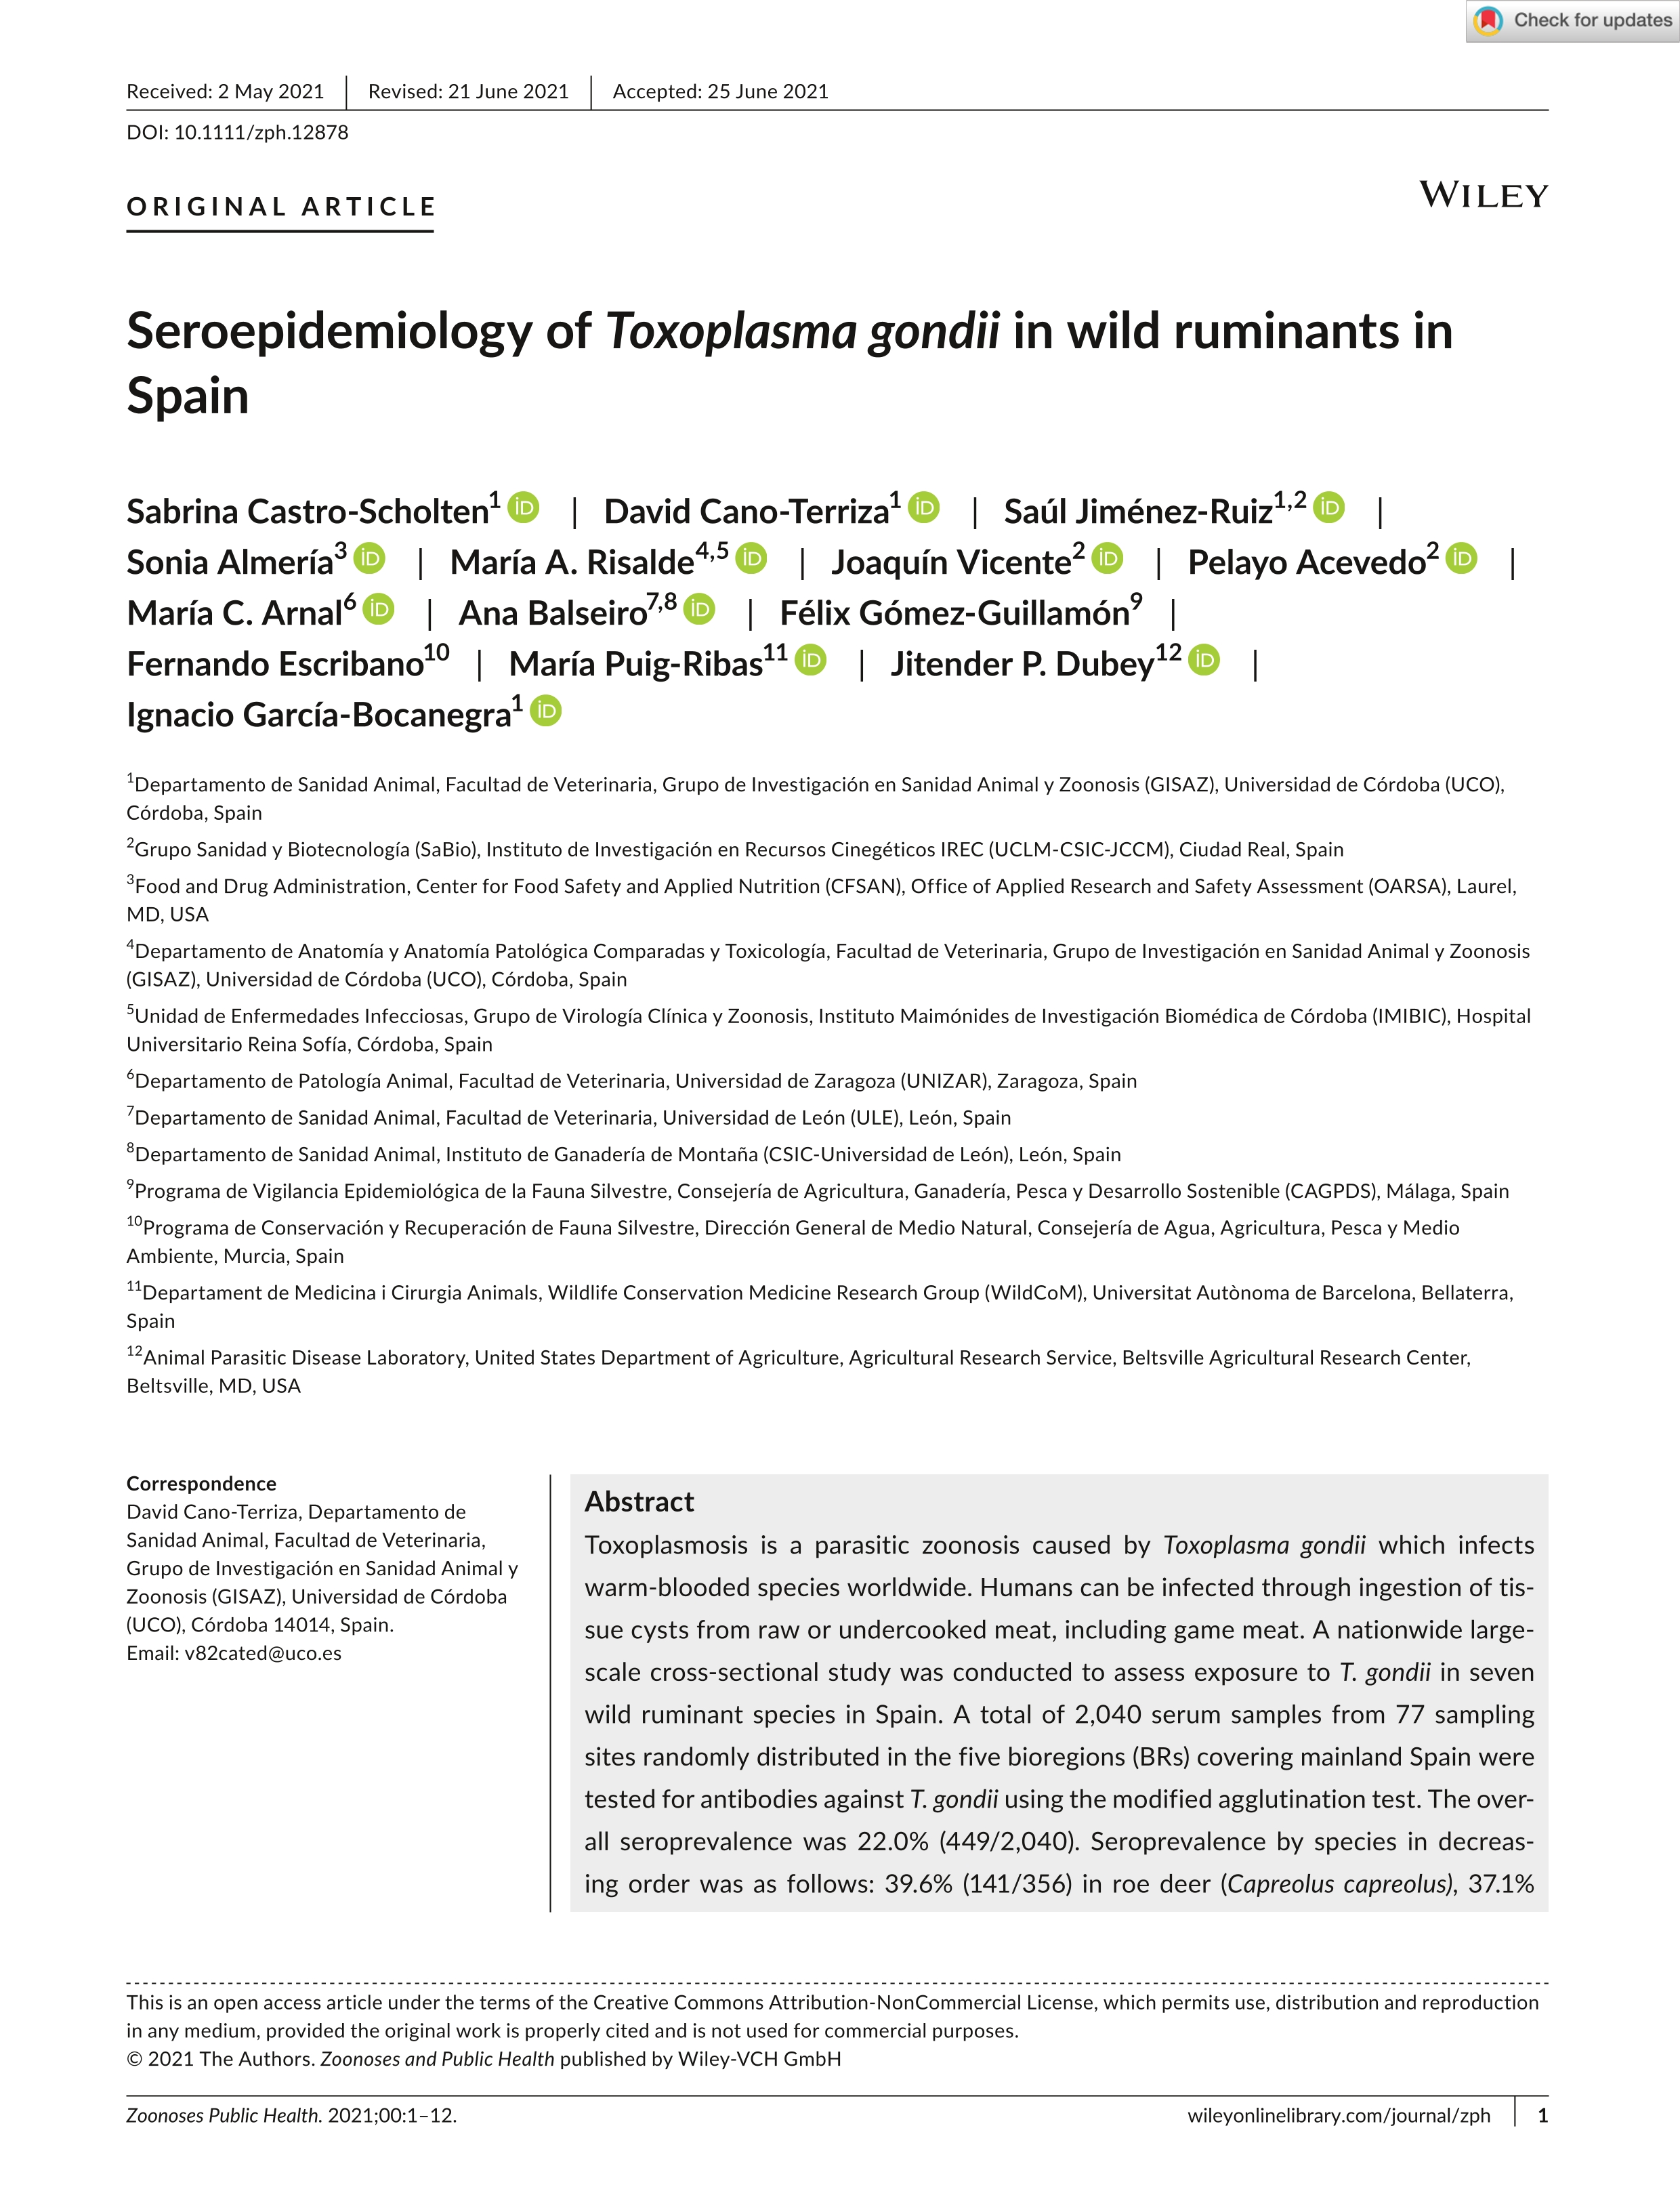 Seroepidemiology of toxoplasma gondii in wild ruminants in Spain